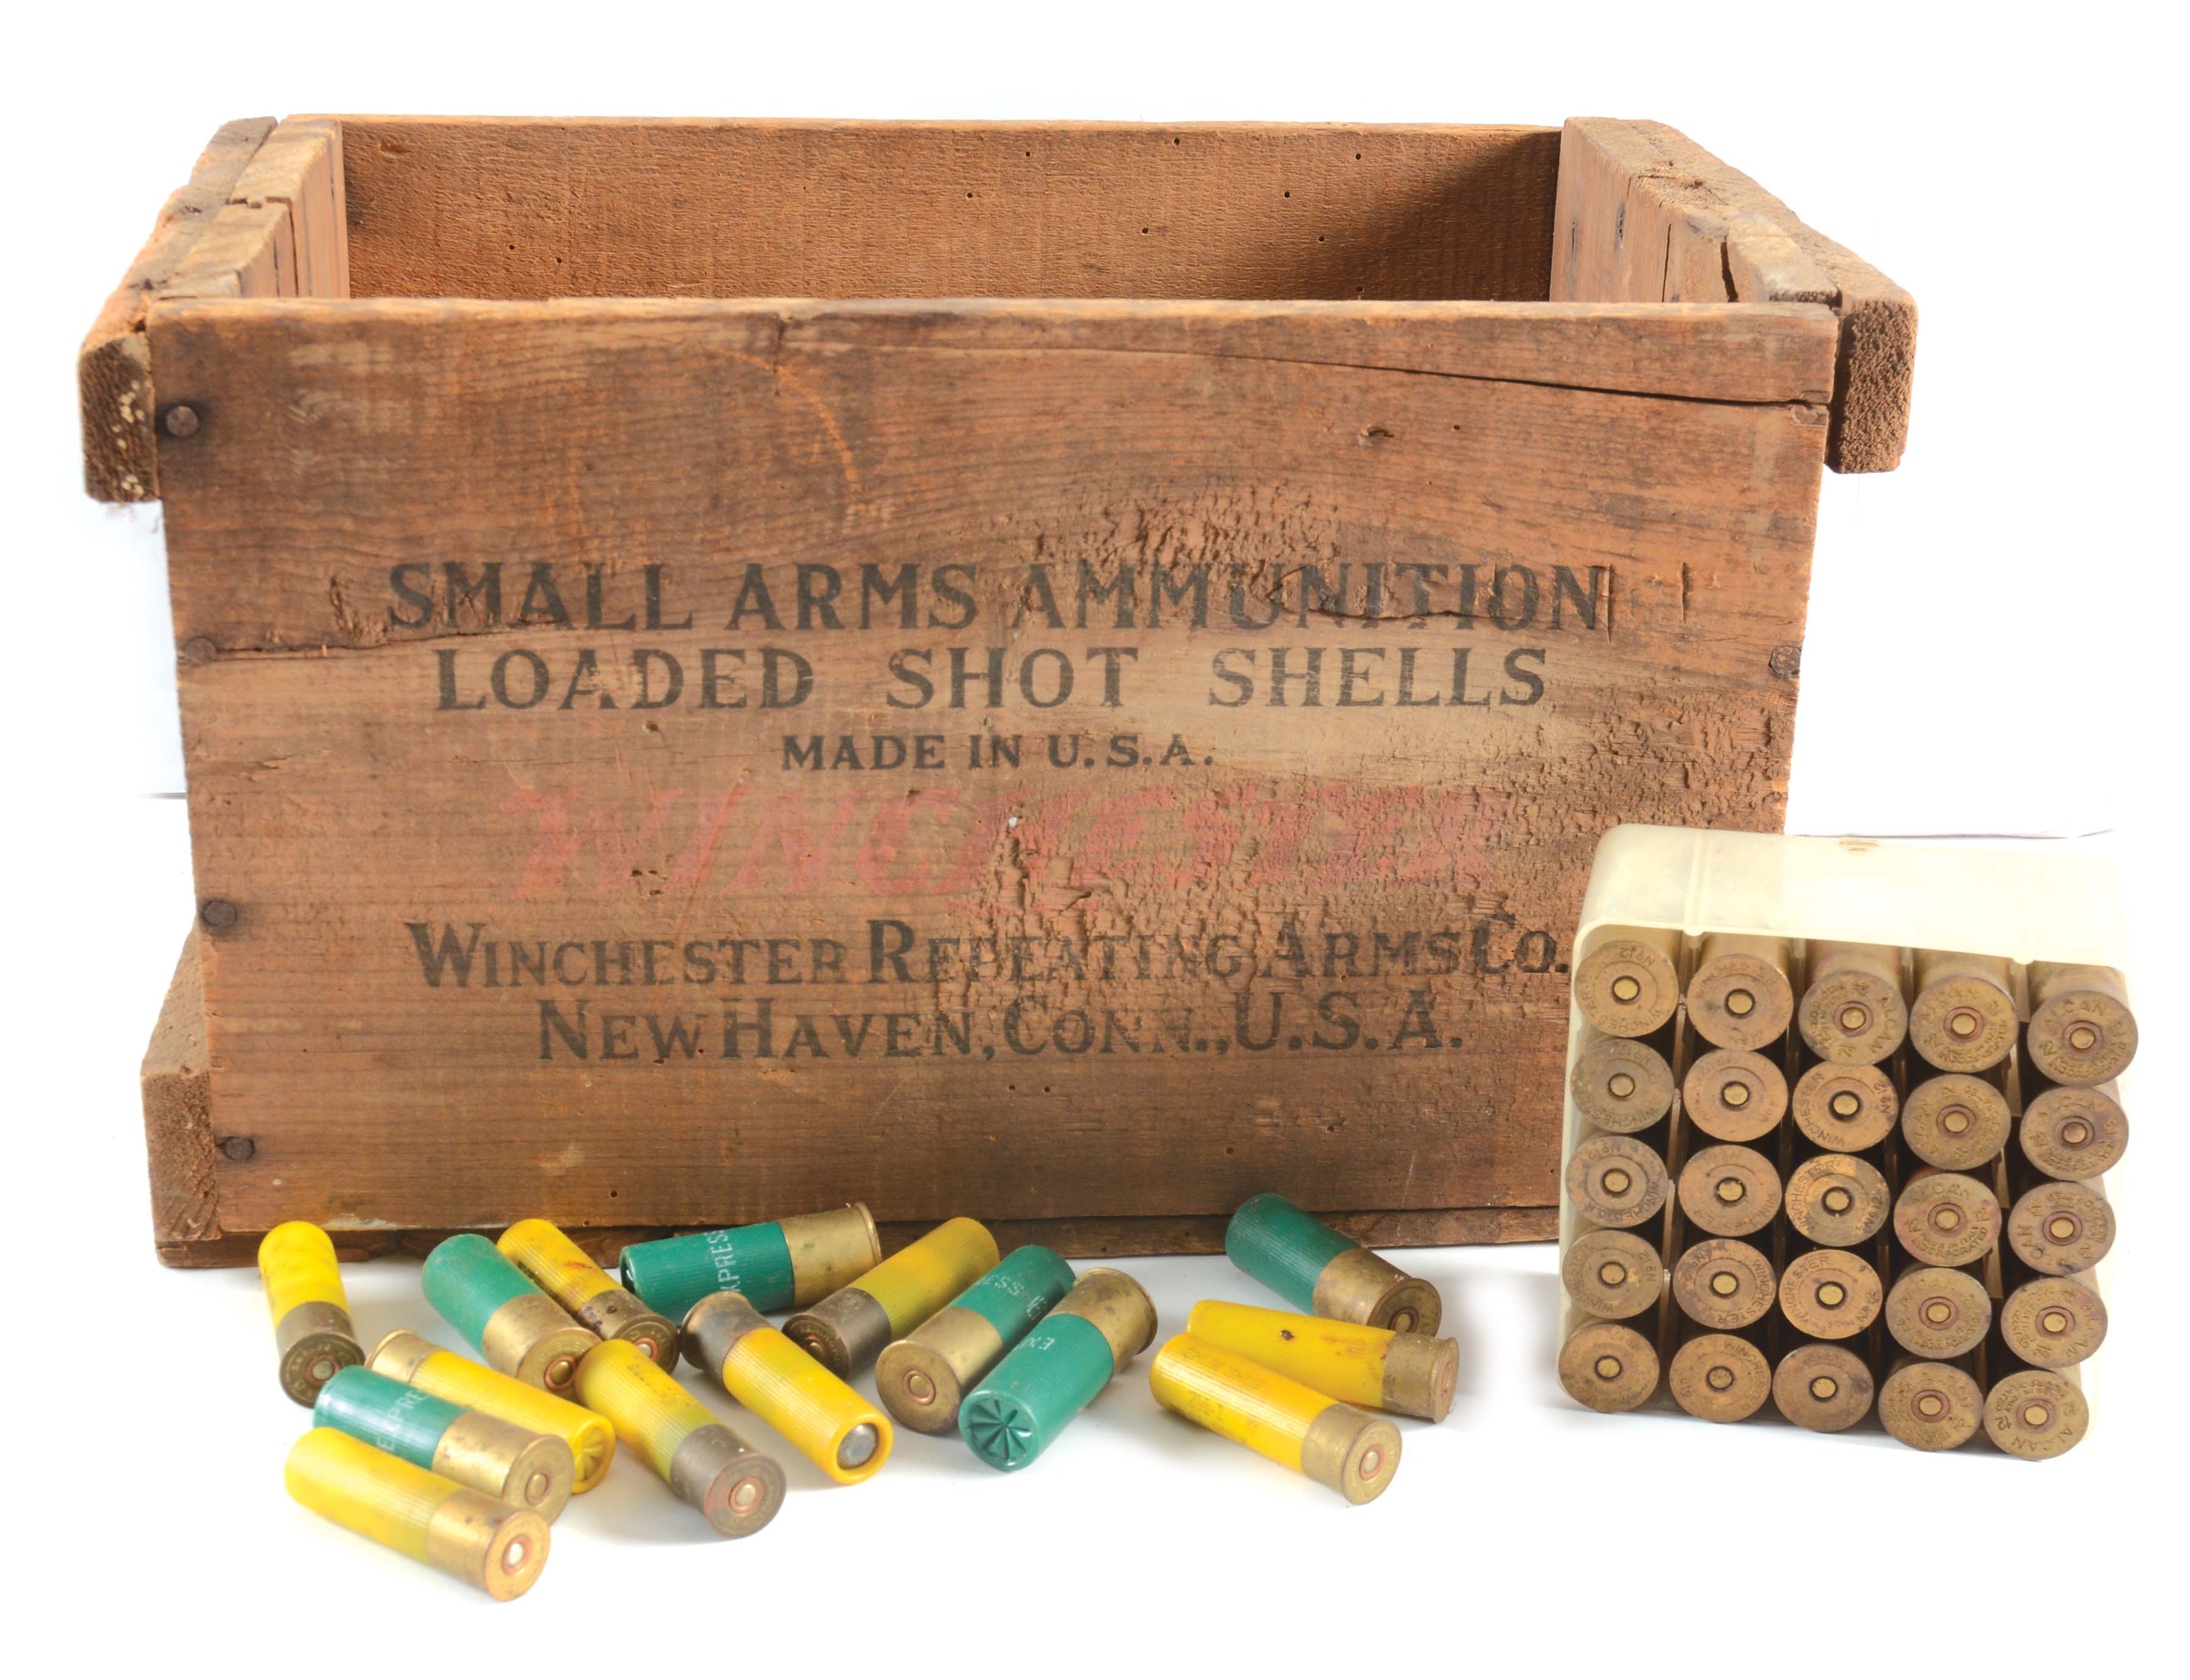 Lot of several shotgun shells in wooden crate. 